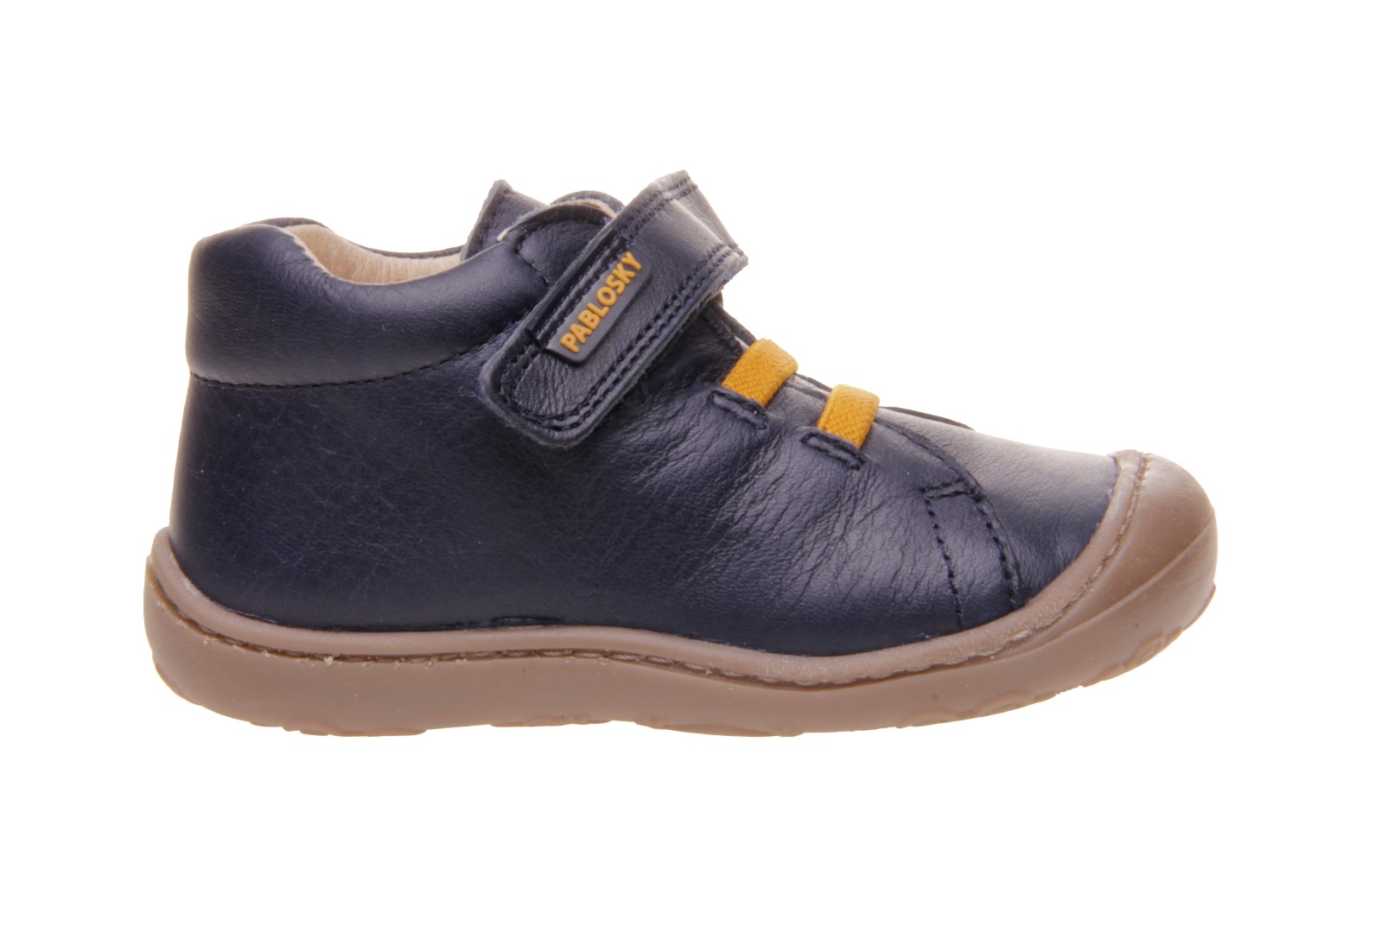 Comprar zapato PABLOSKY para PREANDANTE estilo BOTAS color AZUL MARINO PIEL